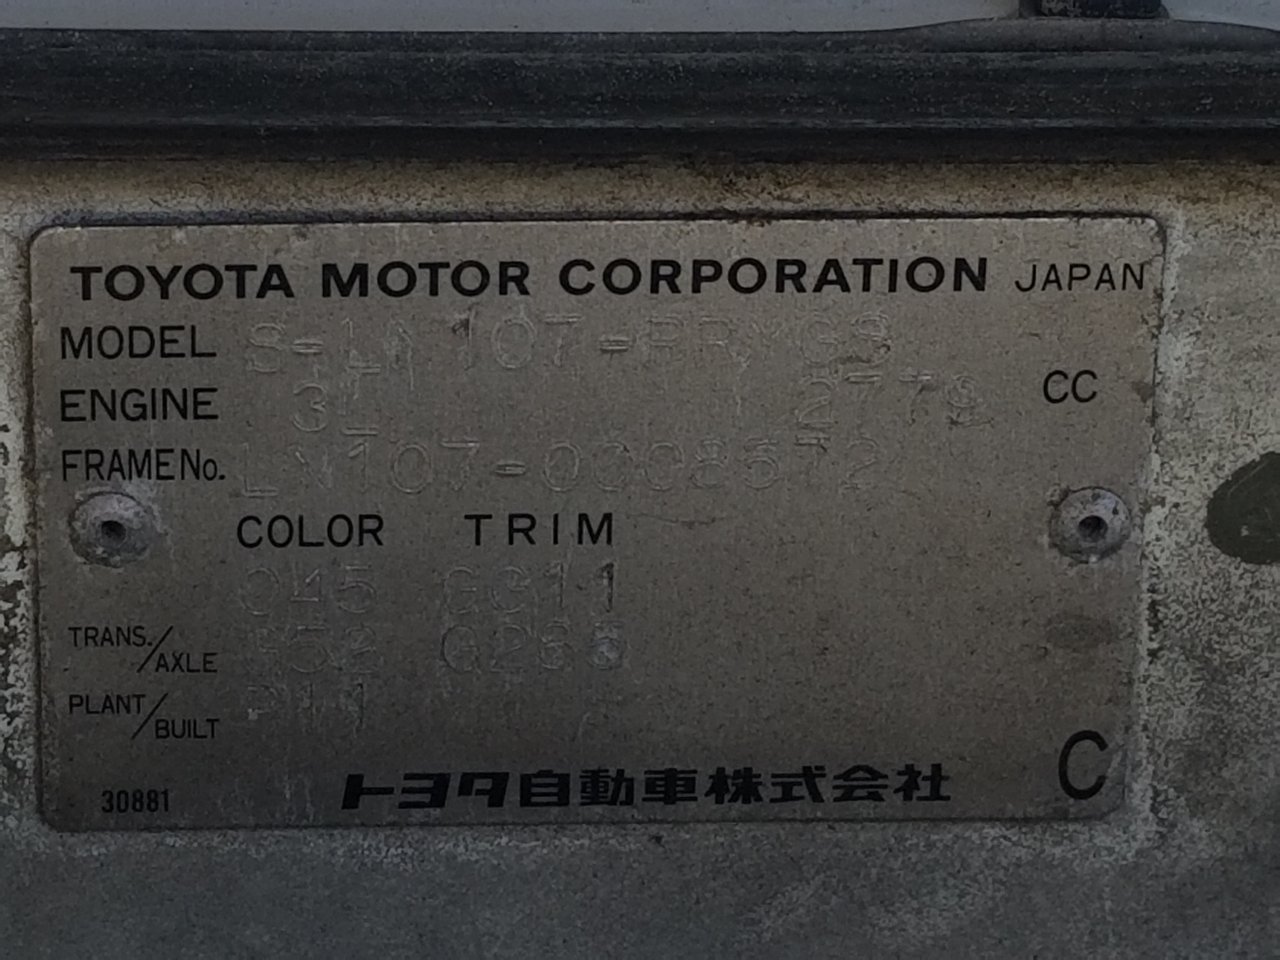 1992 Toyota LN107 Double Cab 4x4 5 Spd. n jpg.jpg